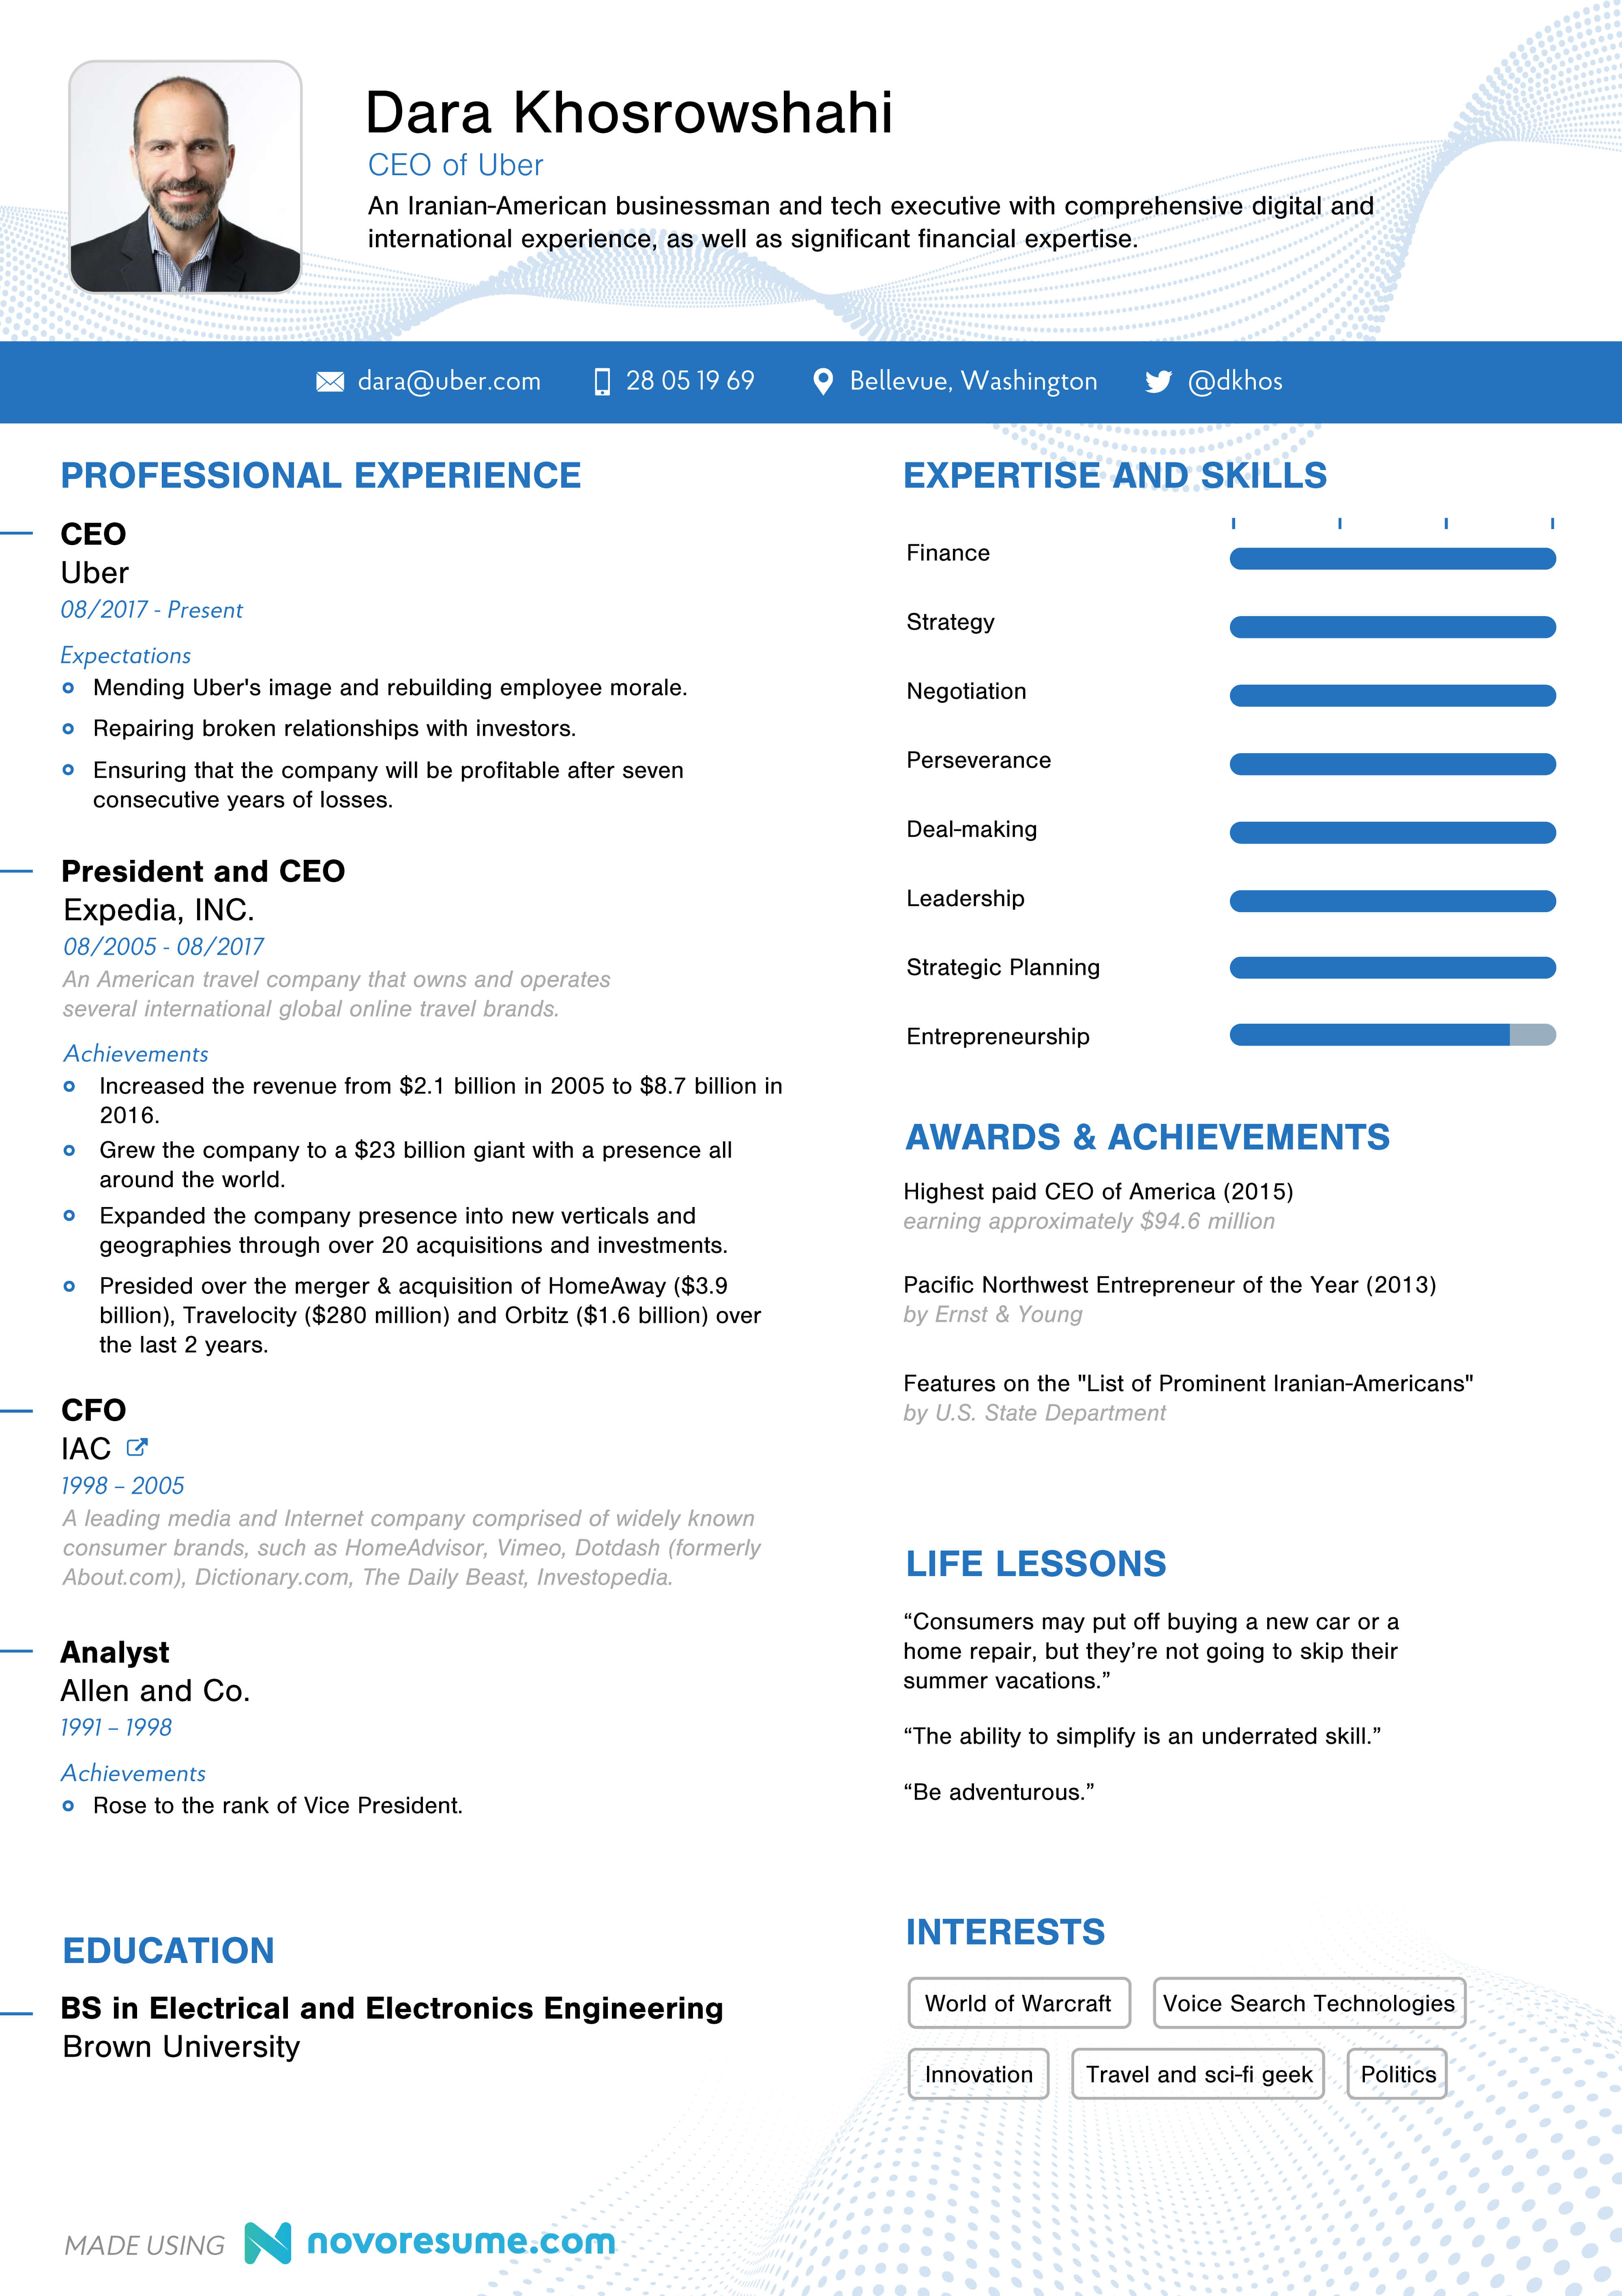 Uber CEO - Dara Khosrowshahi Resume Infographic